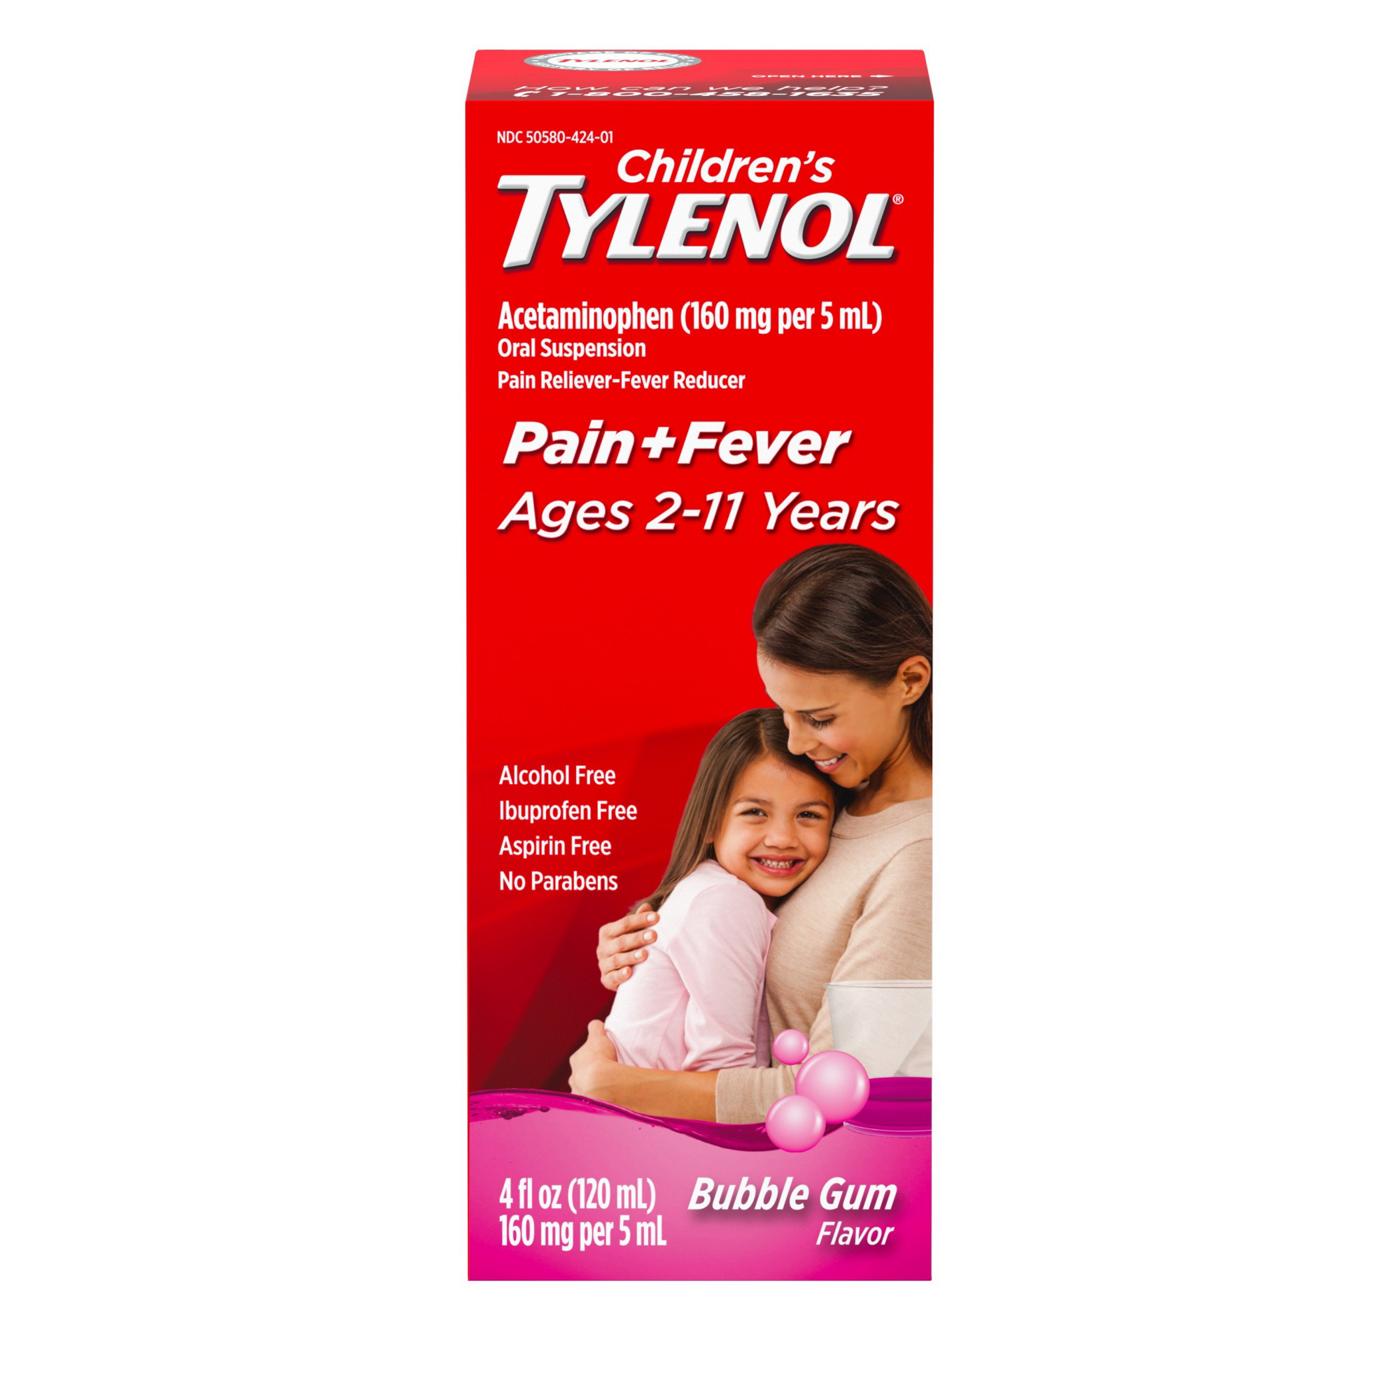 Tylenol Children's Pain + Fever Oral Suspension - Bubble Gum; image 1 of 6